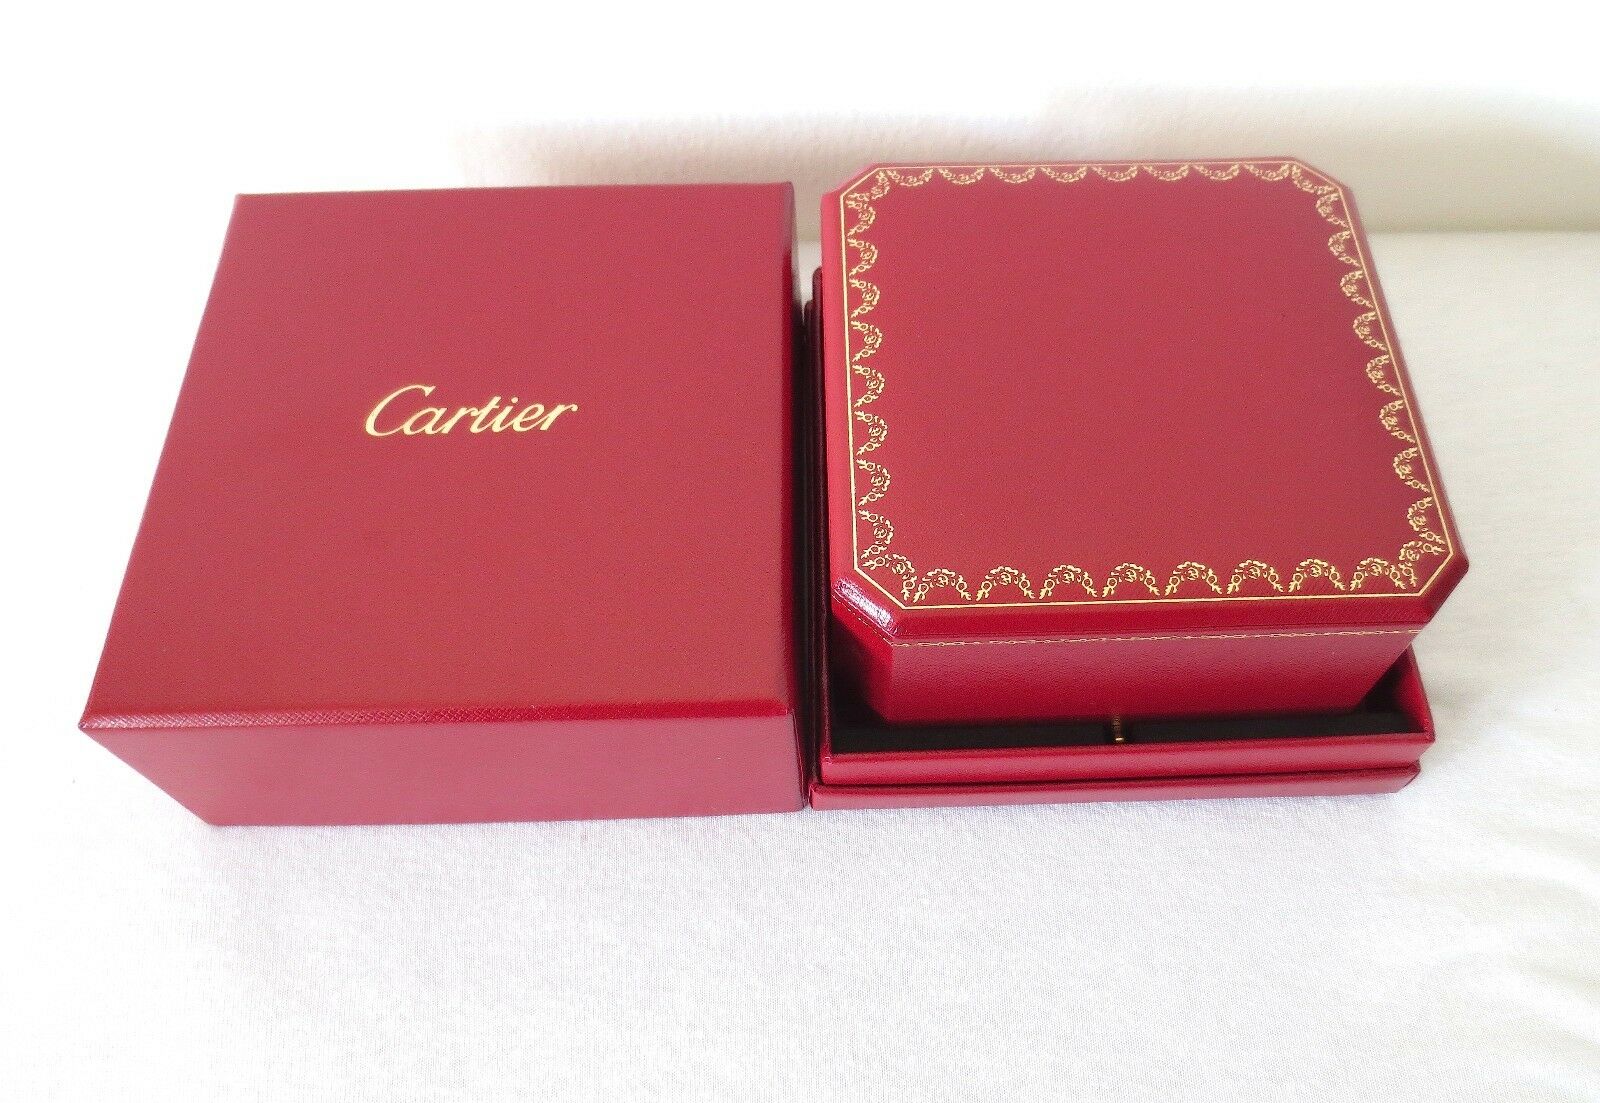 cartier box for love bracelet